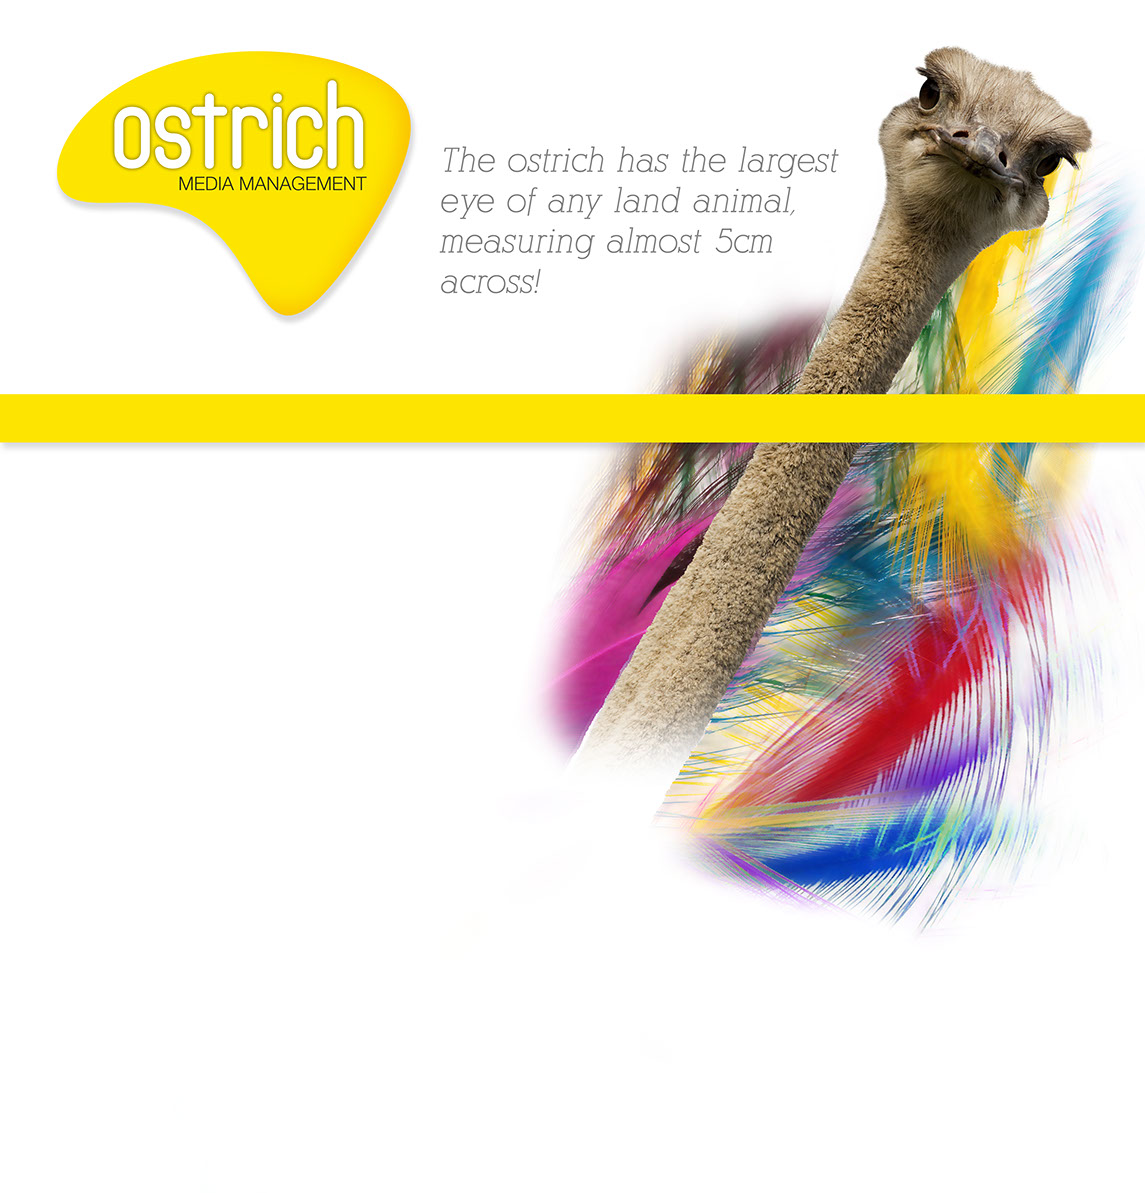 Ostrich Media Management Design Service